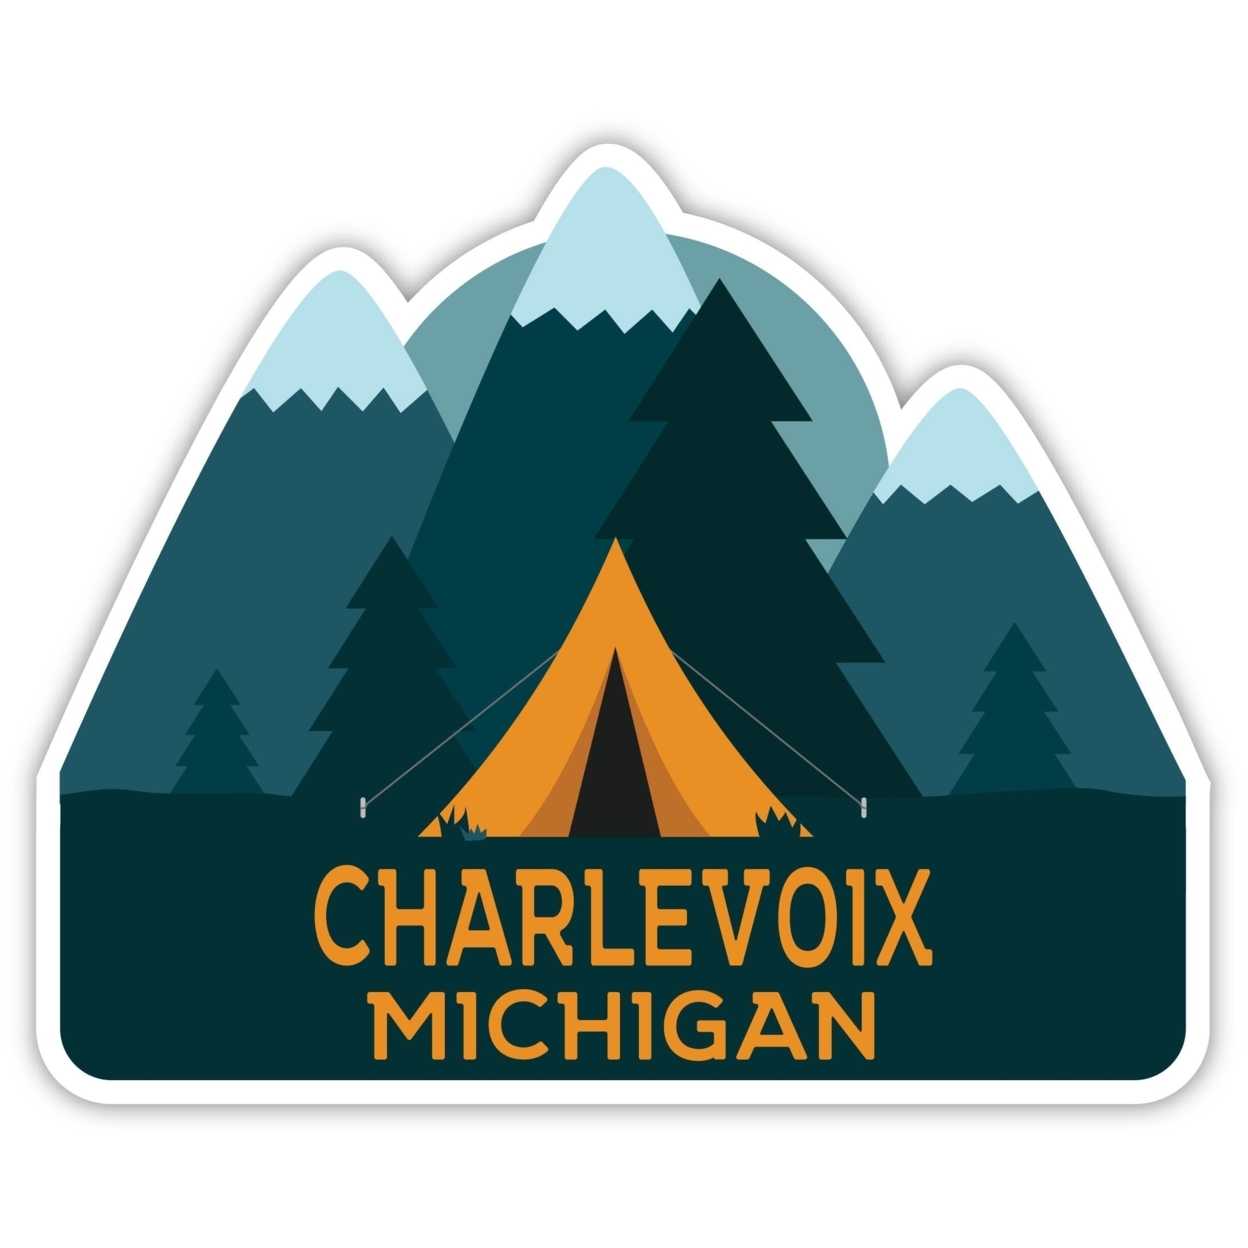 Charlevoix Michigan Souvenir Decorative Stickers (Choose Theme And Size) - Single Unit, 2-Inch, Adventures Awaits